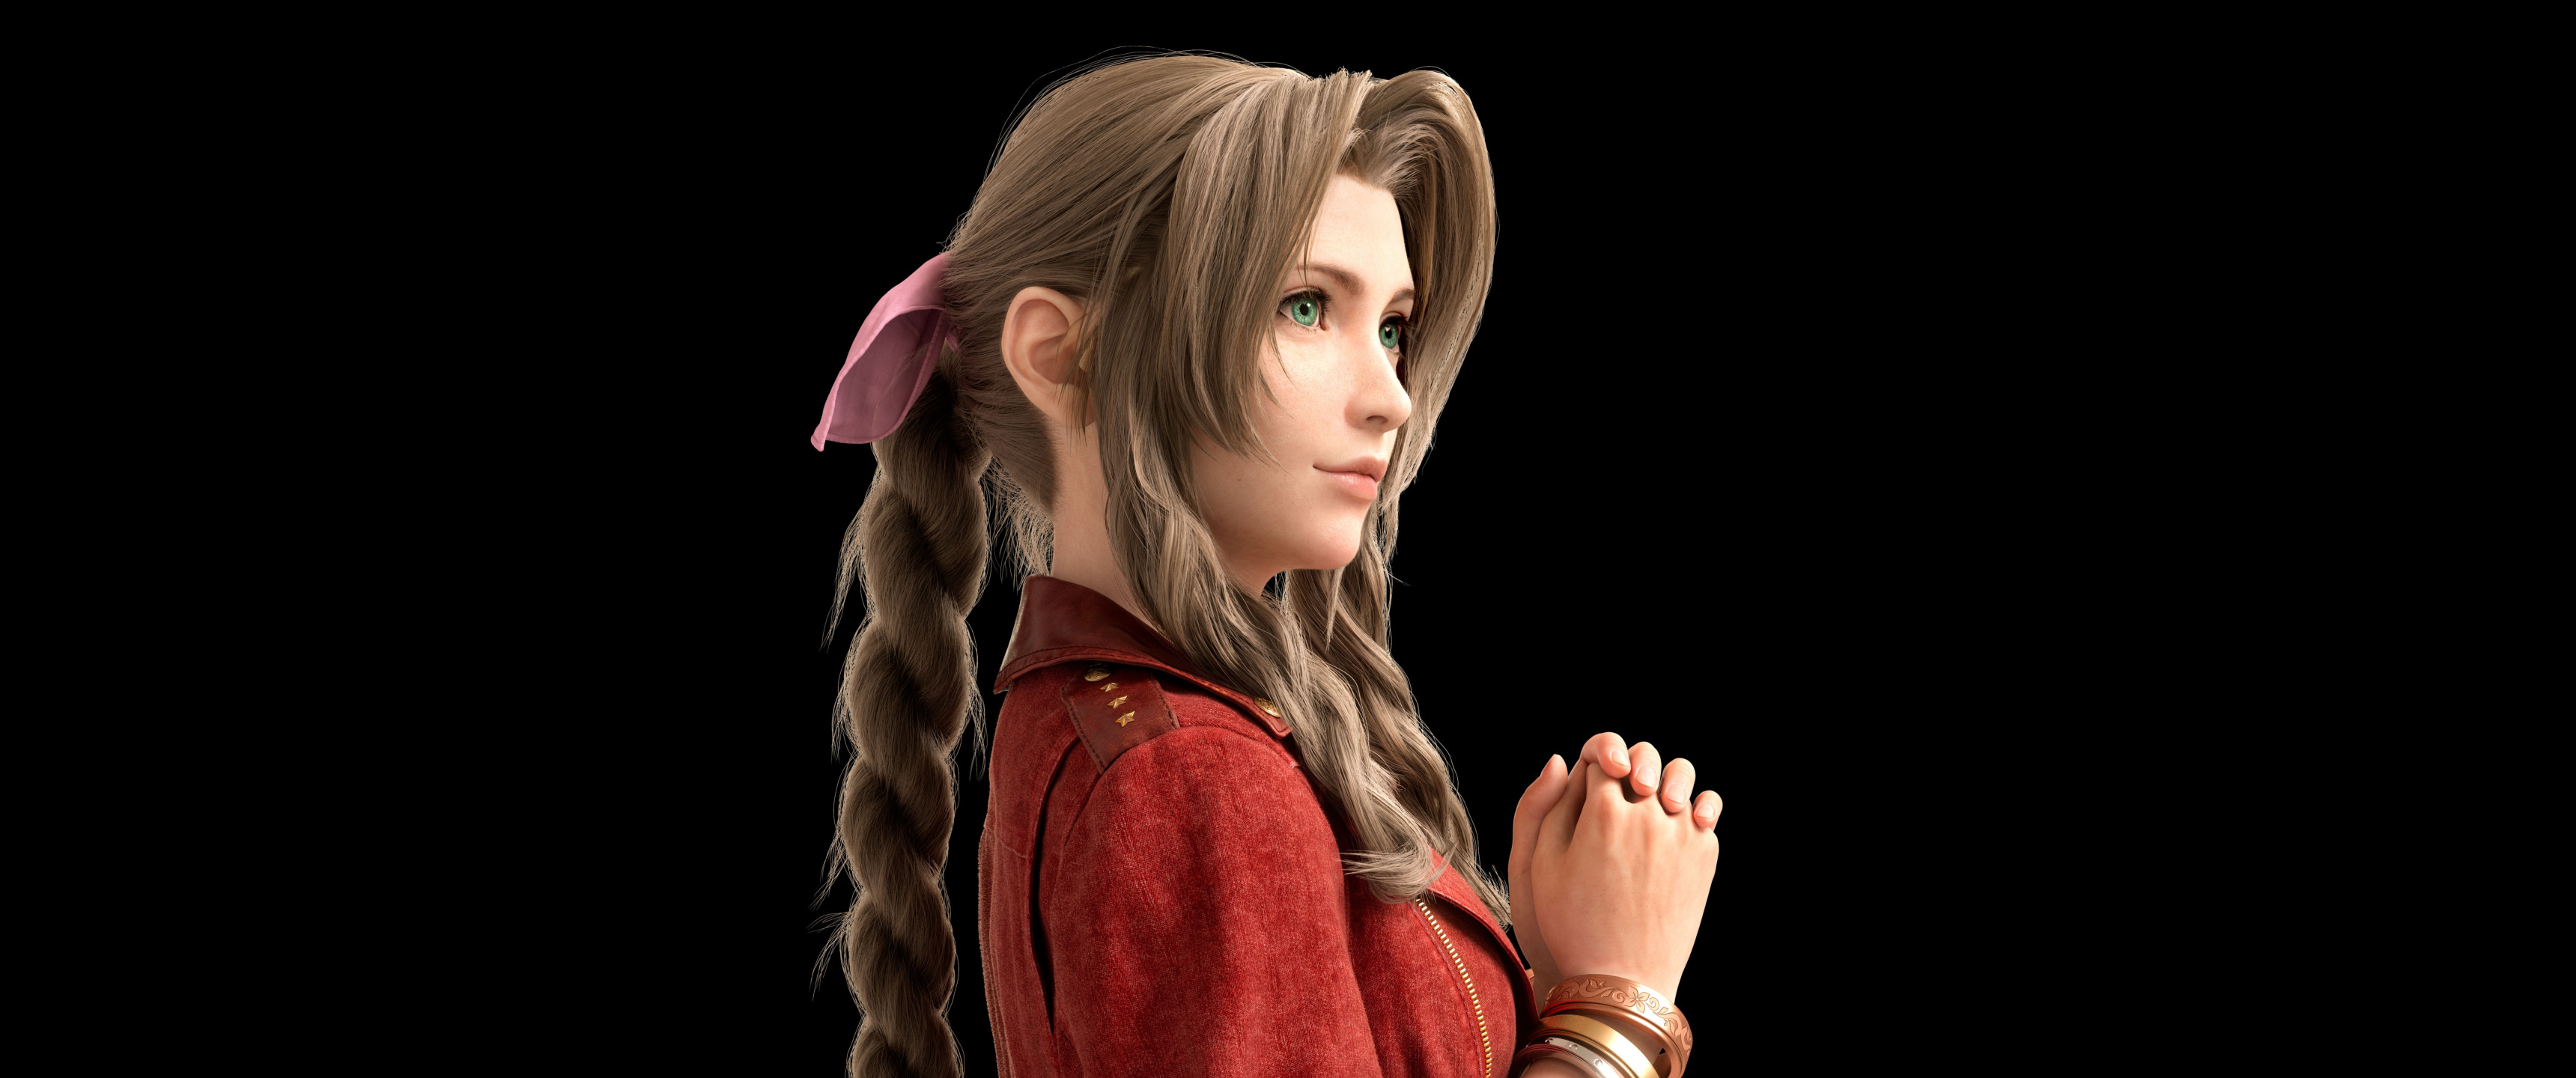 Ponytail Hairstyles Final Fantasy. 4 game girl